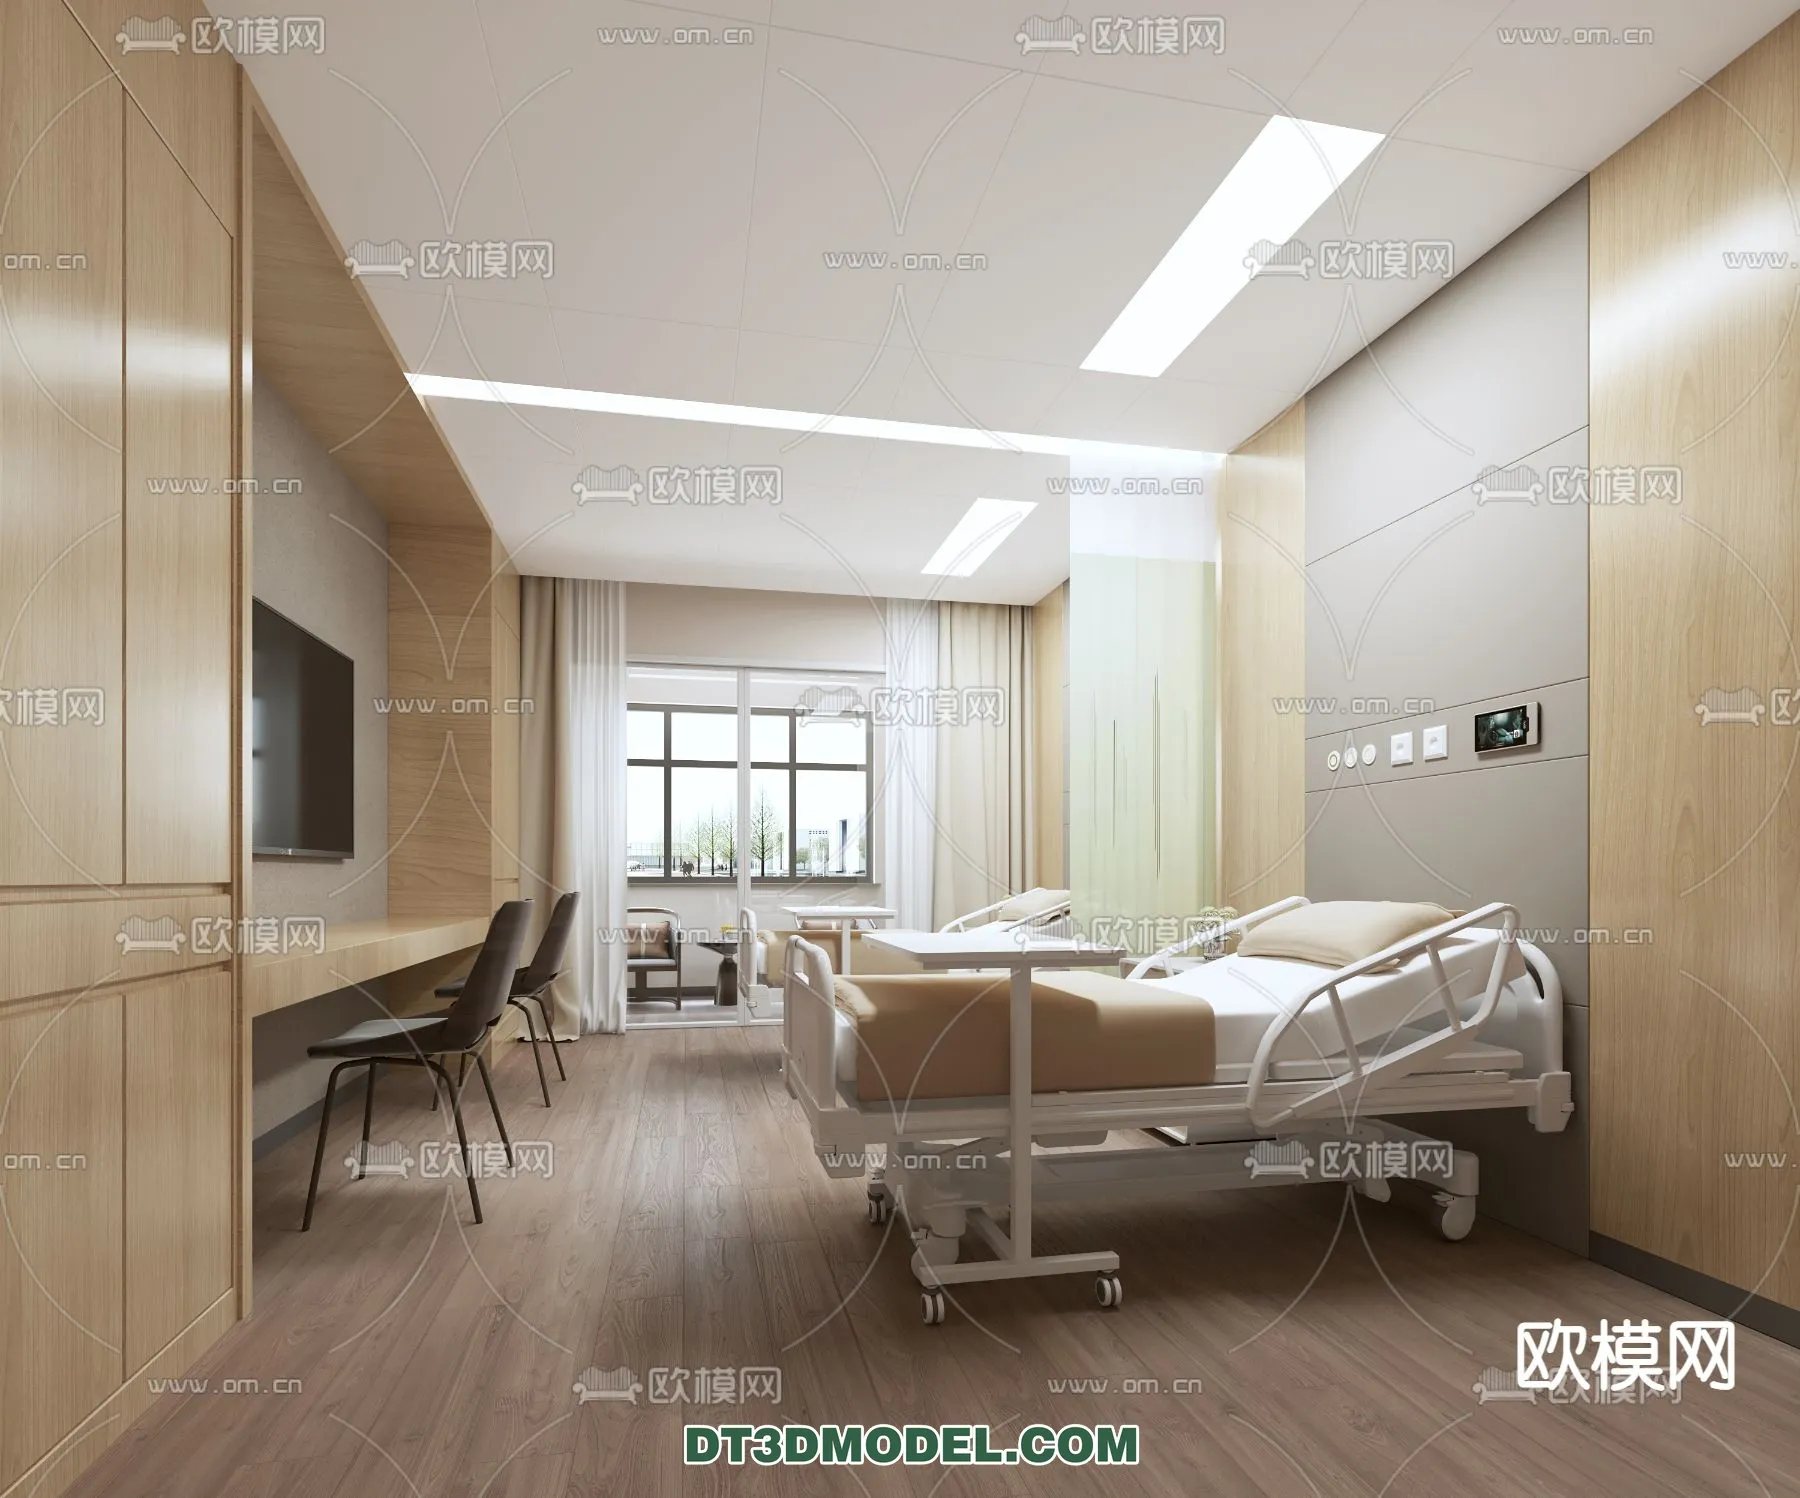 HOSPITAL 3D SCENES – MODERN – 0097